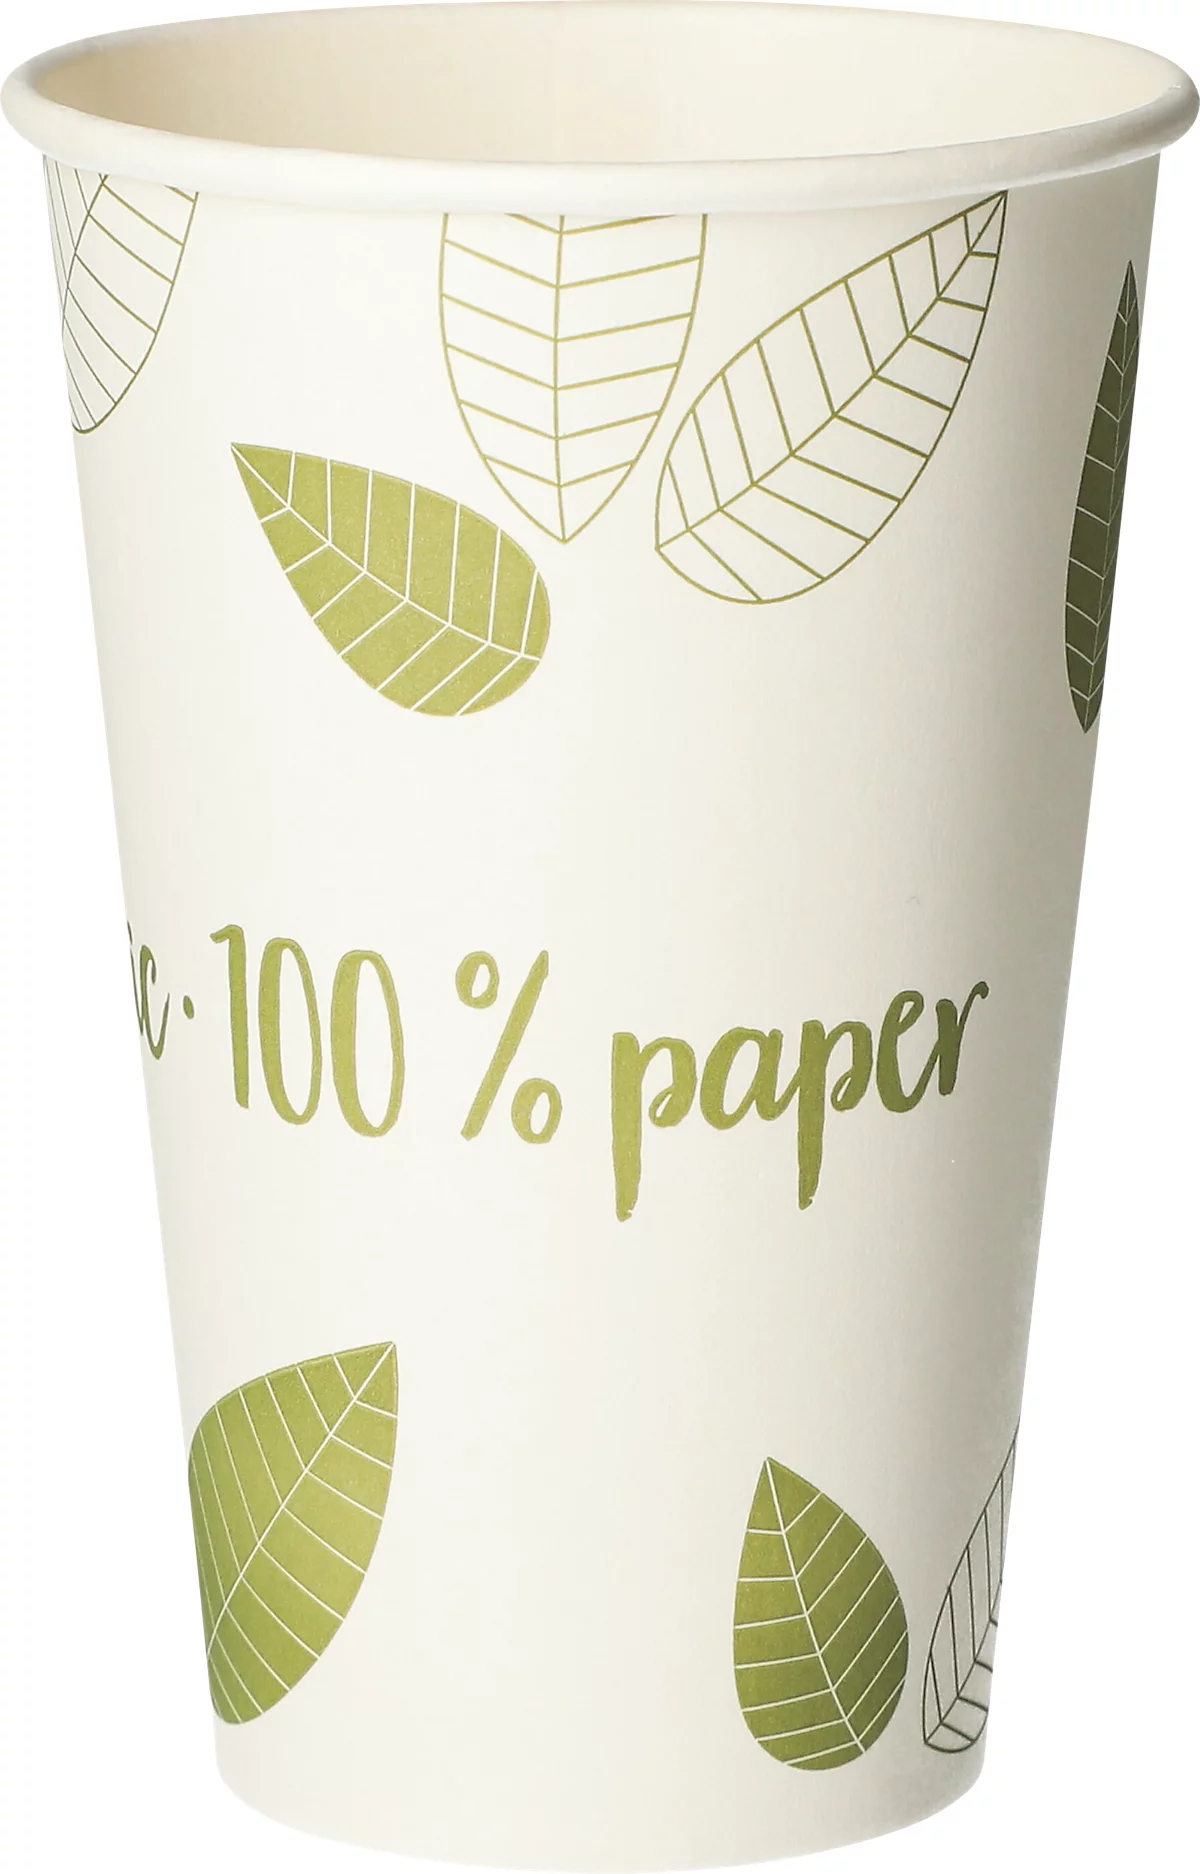 Vasos desechables Papstar Pure Zero, 0,3 l, Ø 80 x H 117 mm, 100% biodegradables y de cartón certificado FSC®, color crema, 50 unidades